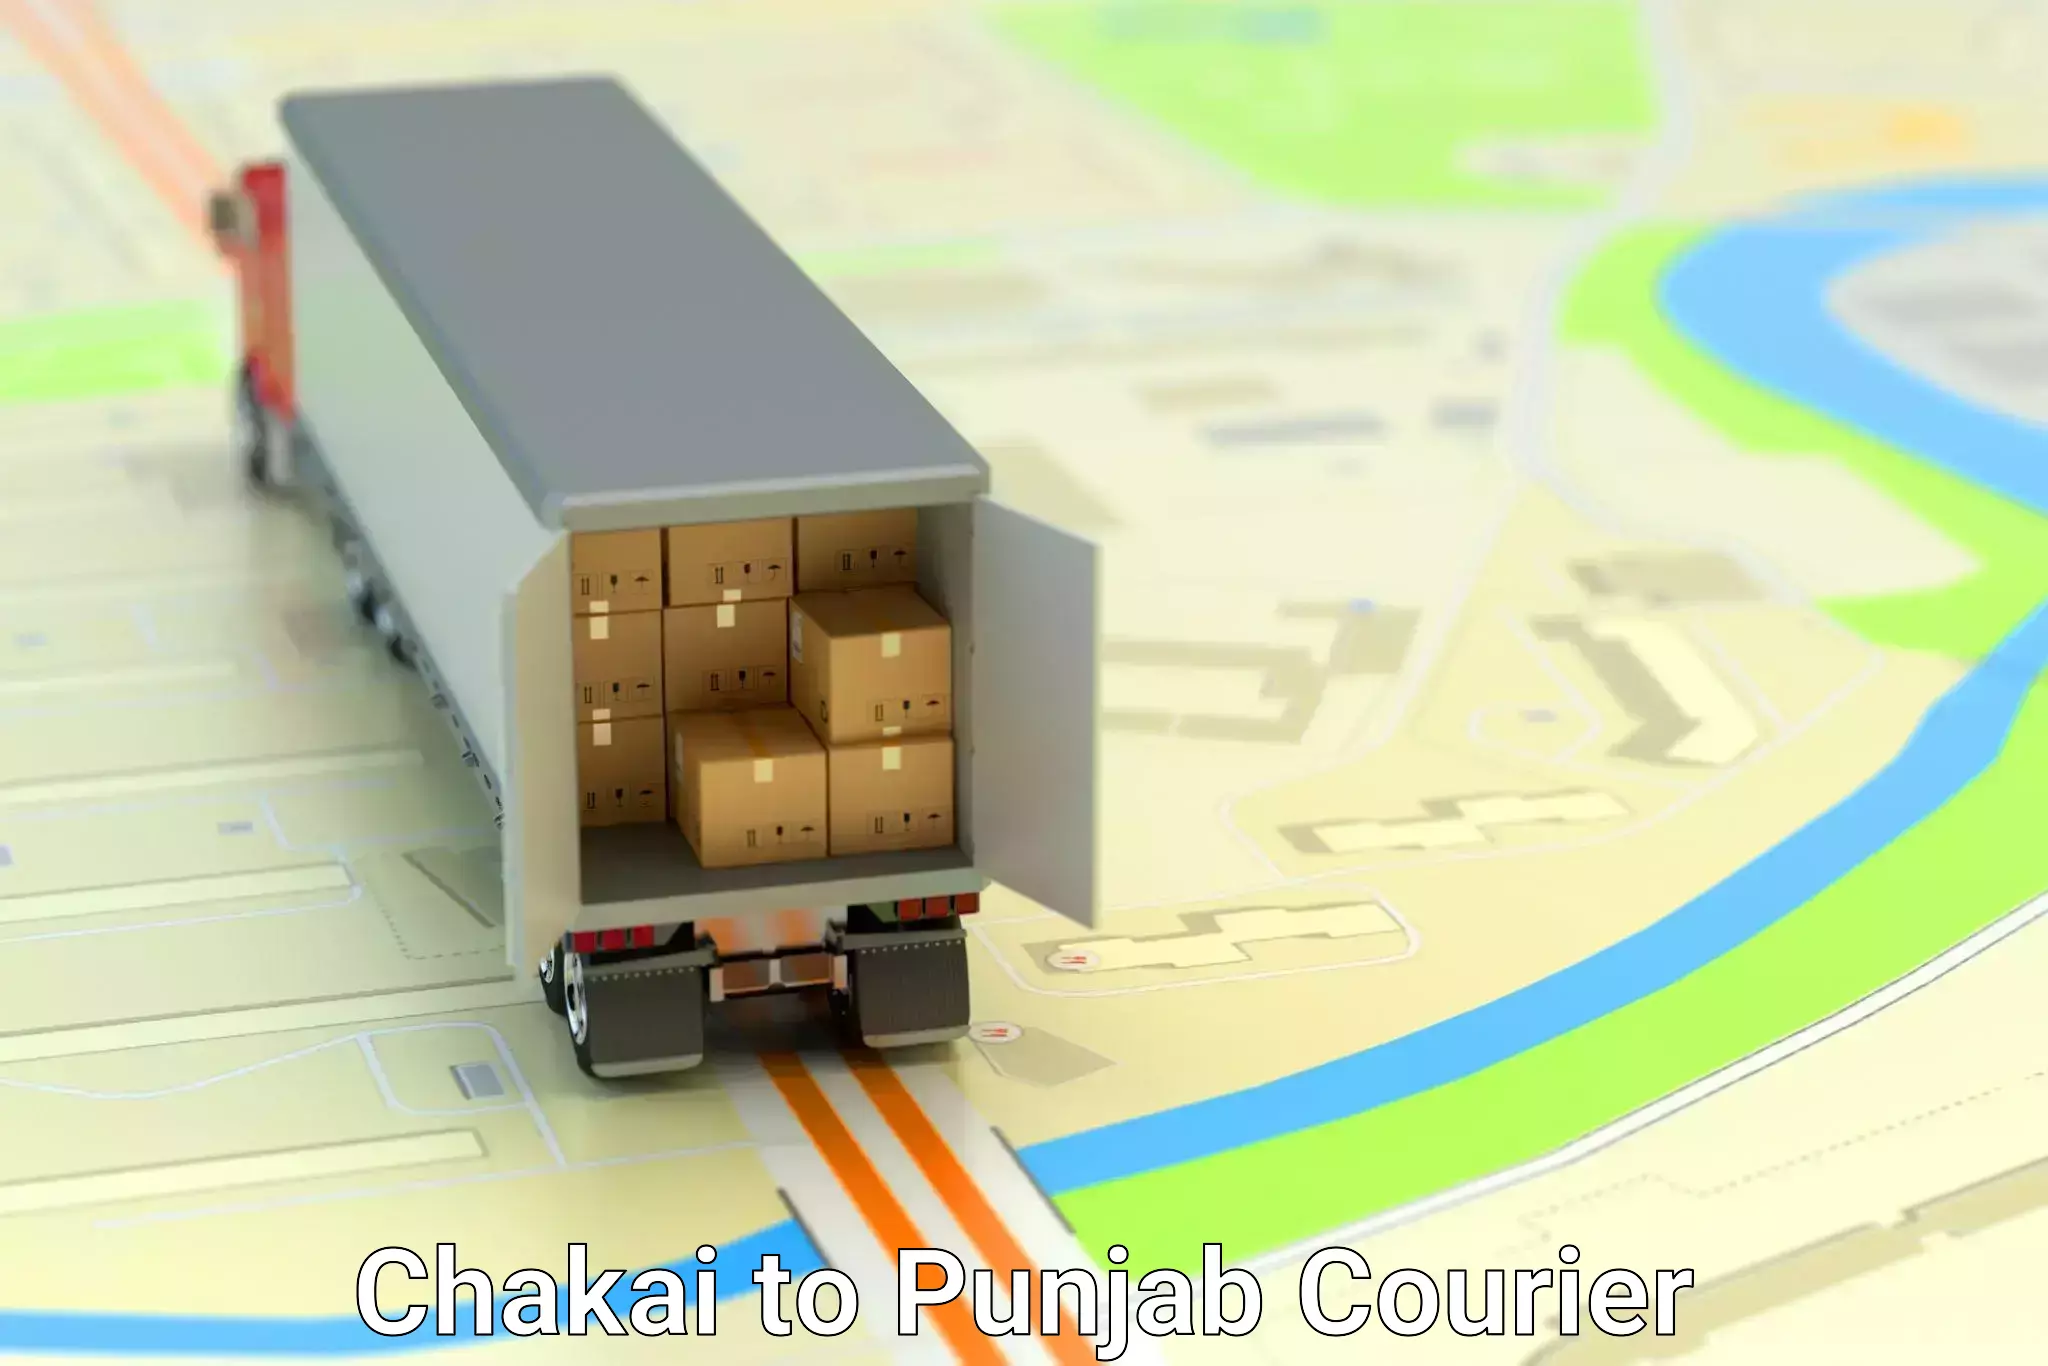 Home shifting experts Chakai to Punjab